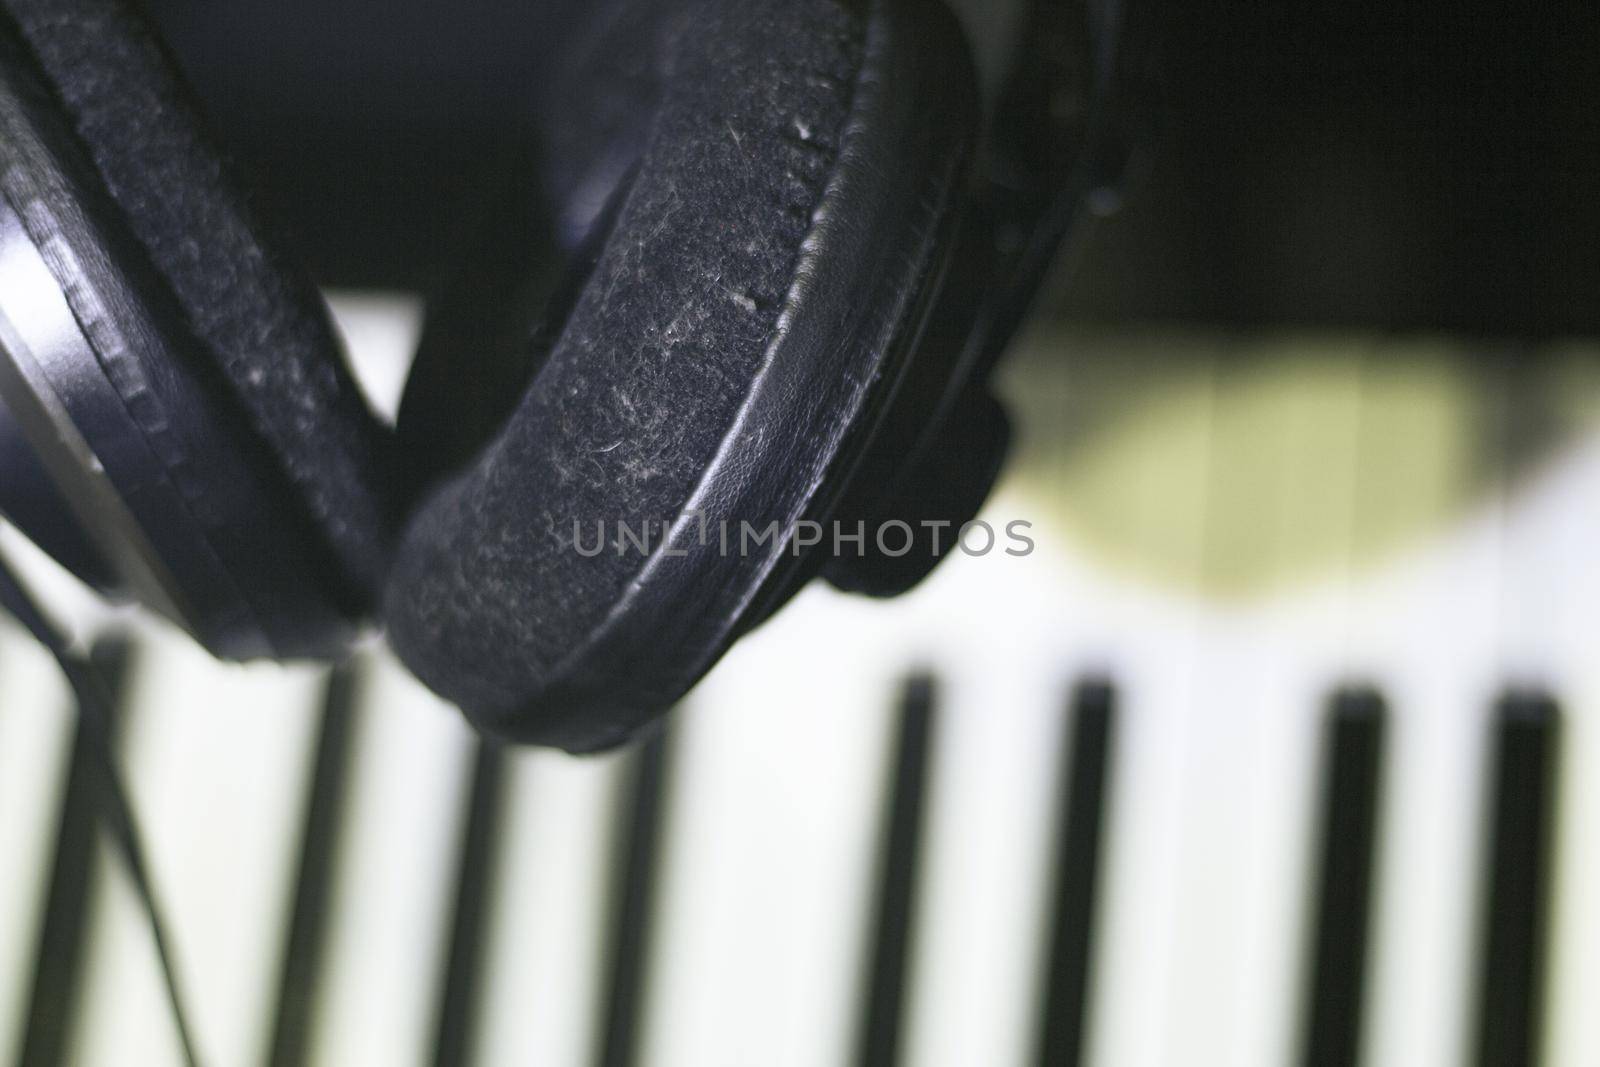 Music headphones on piano keys by GemaIbarra